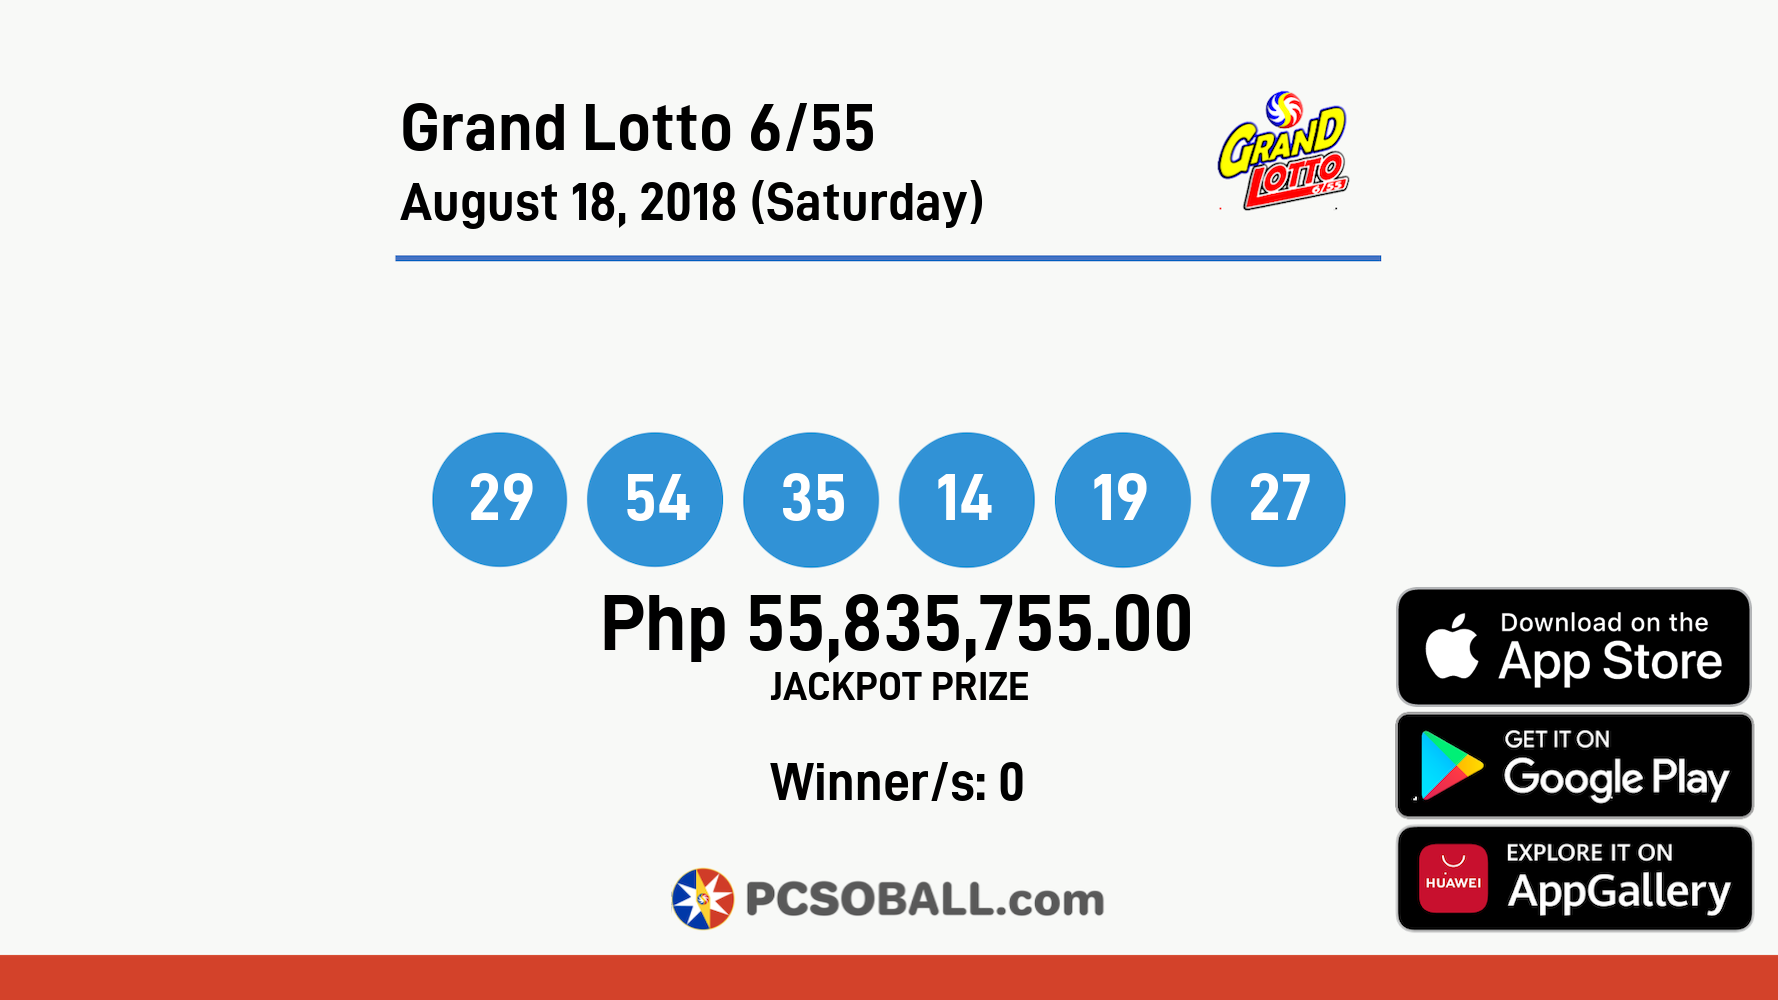 Grand Lotto 6/55 August 18, 2018 (Saturday) Result